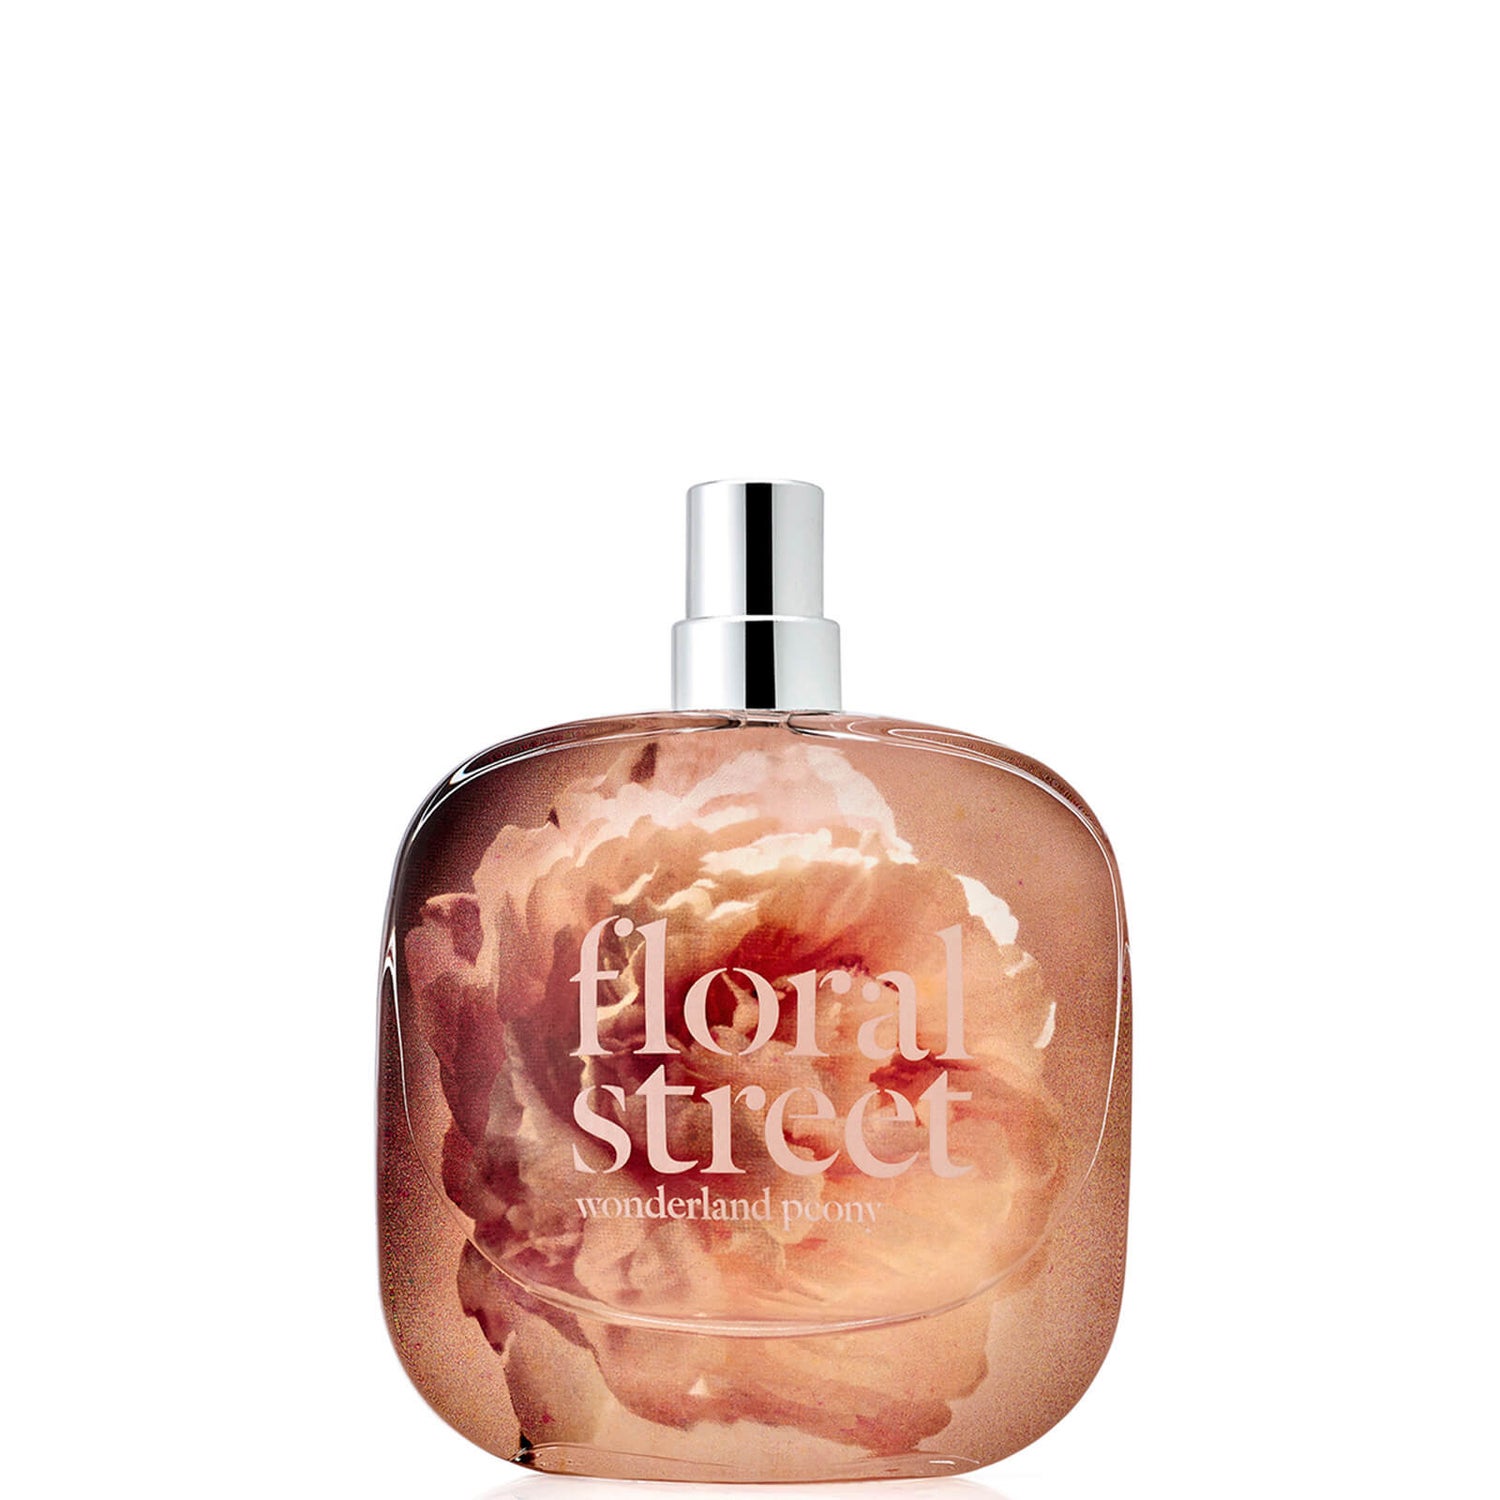 Floral Street Wonderland Peony Eau de Parfum 100ml